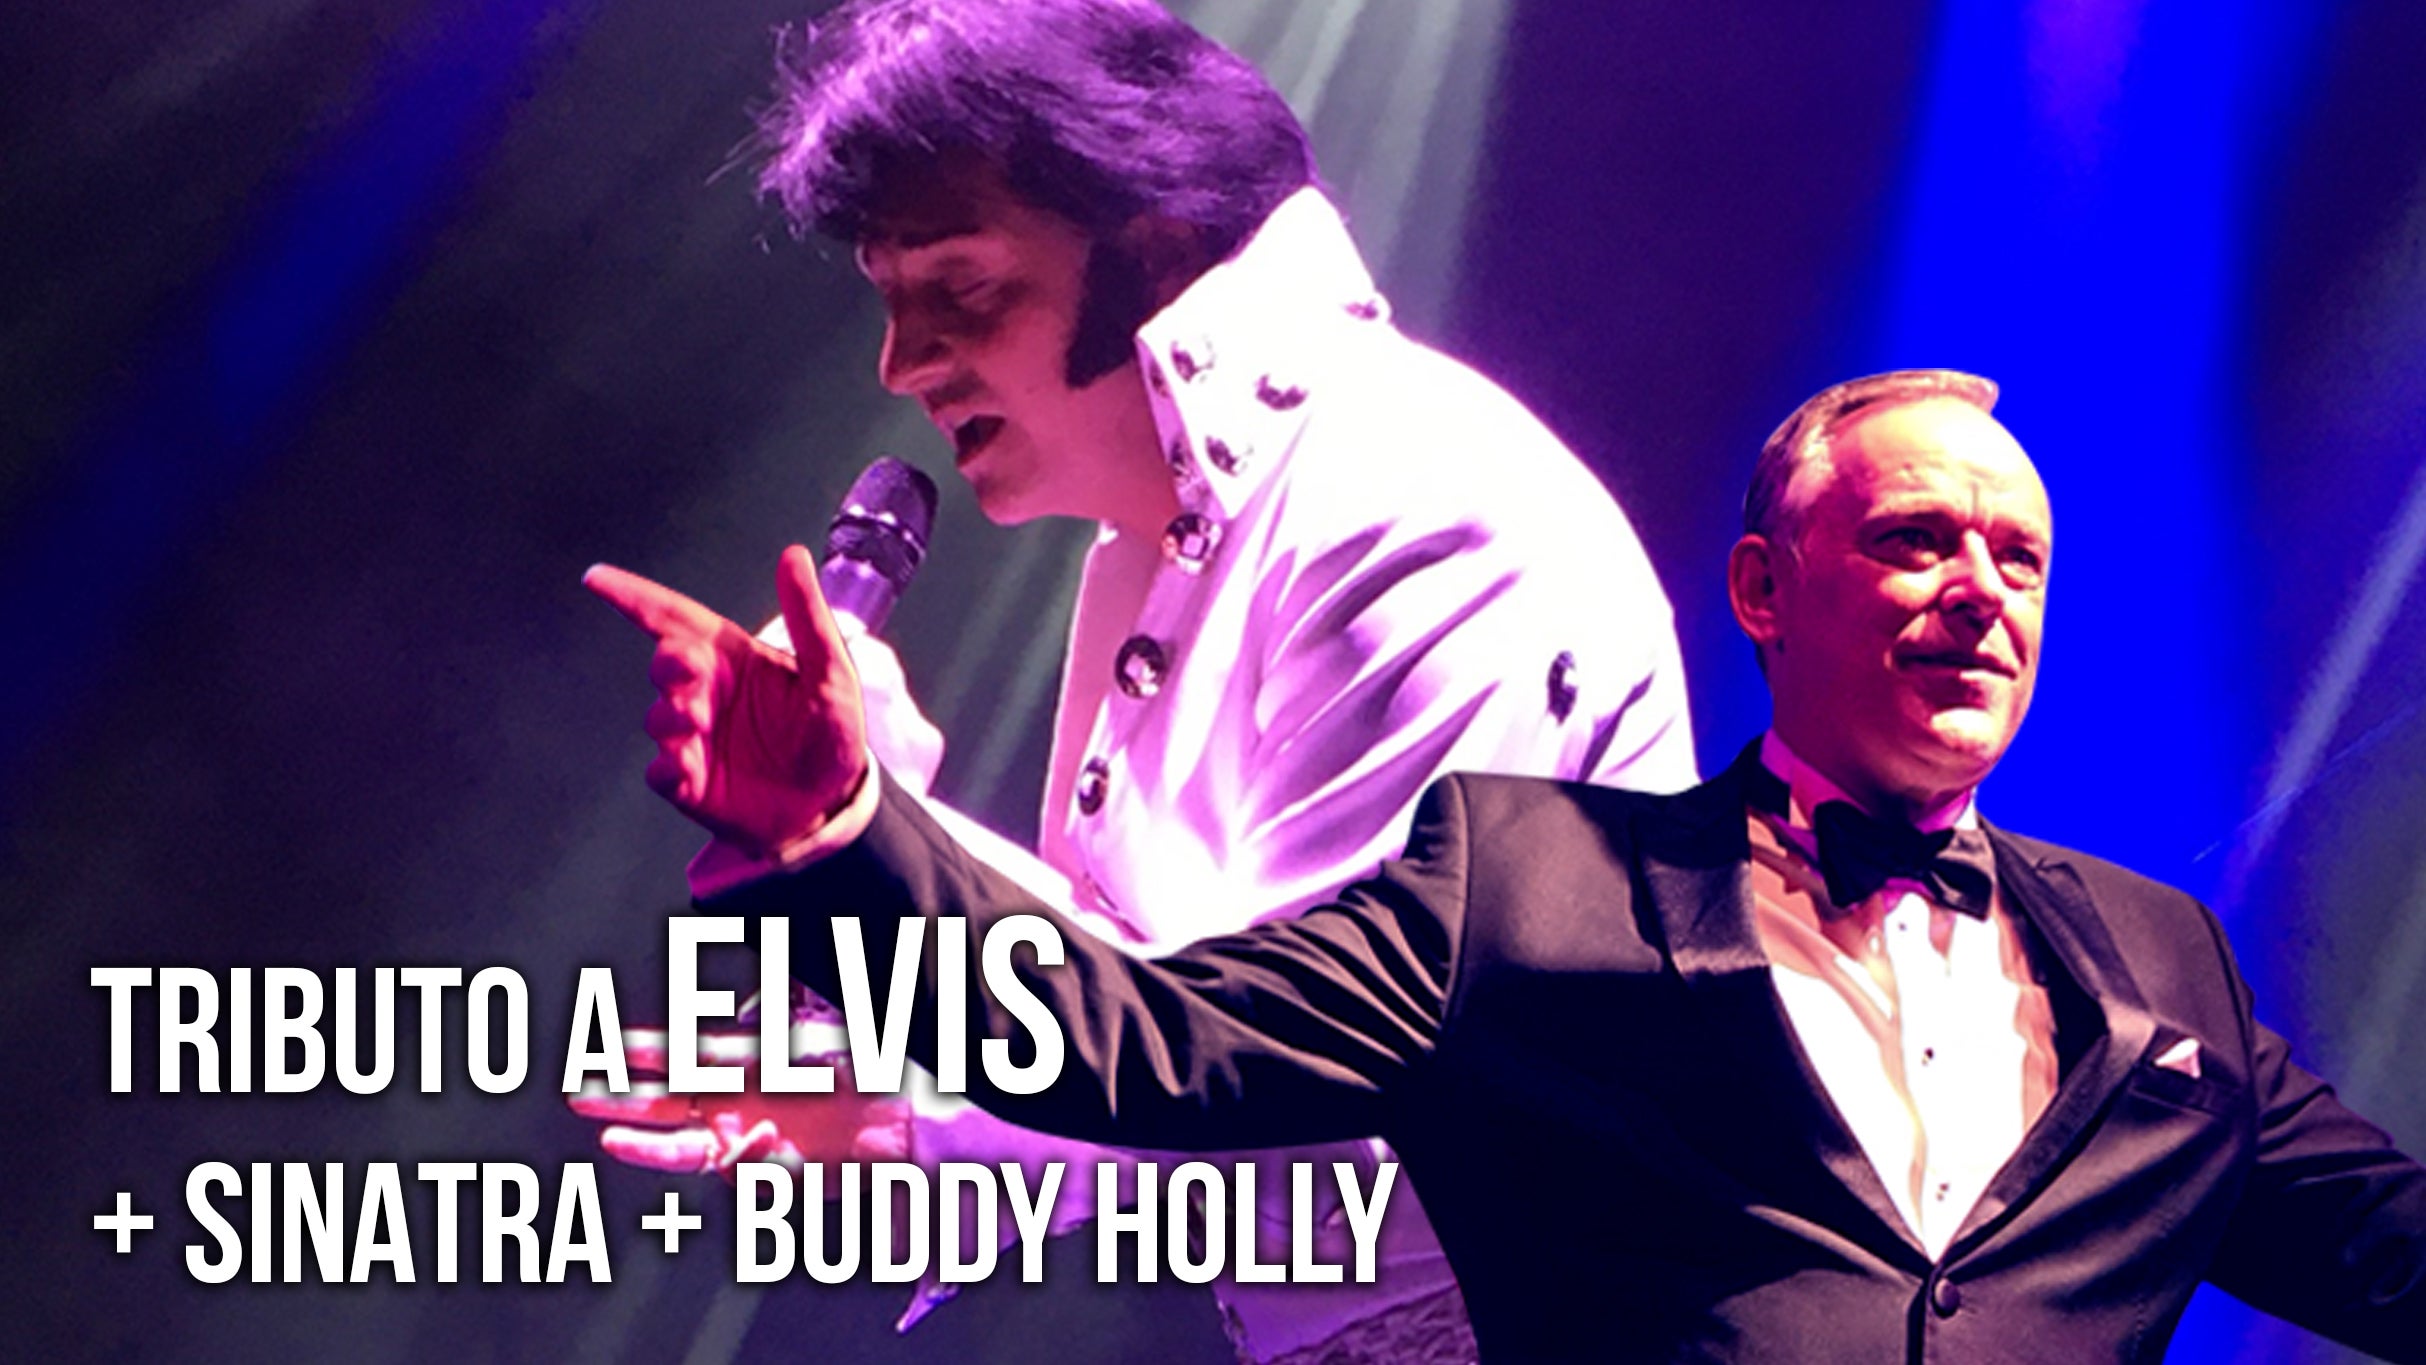 Tributo a Elvis, Frank Sinatra &amp; Buddy Holly presale information on freepresalepasswords.com